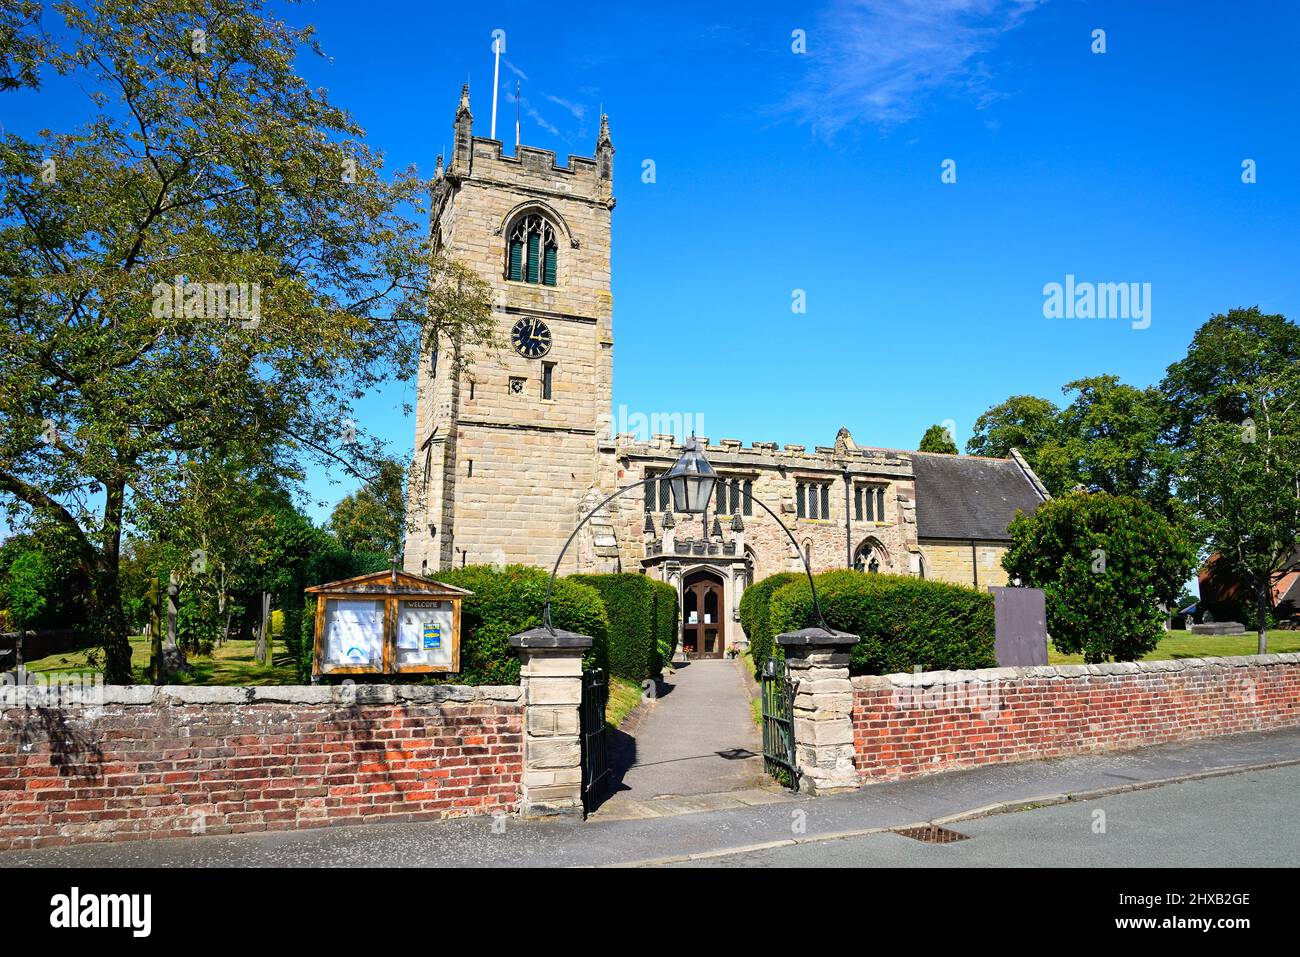 Entrance to All Saints Church along Church Lane, Kings Bromley, Staffordshire, England, UK, Europe. Stock Photo